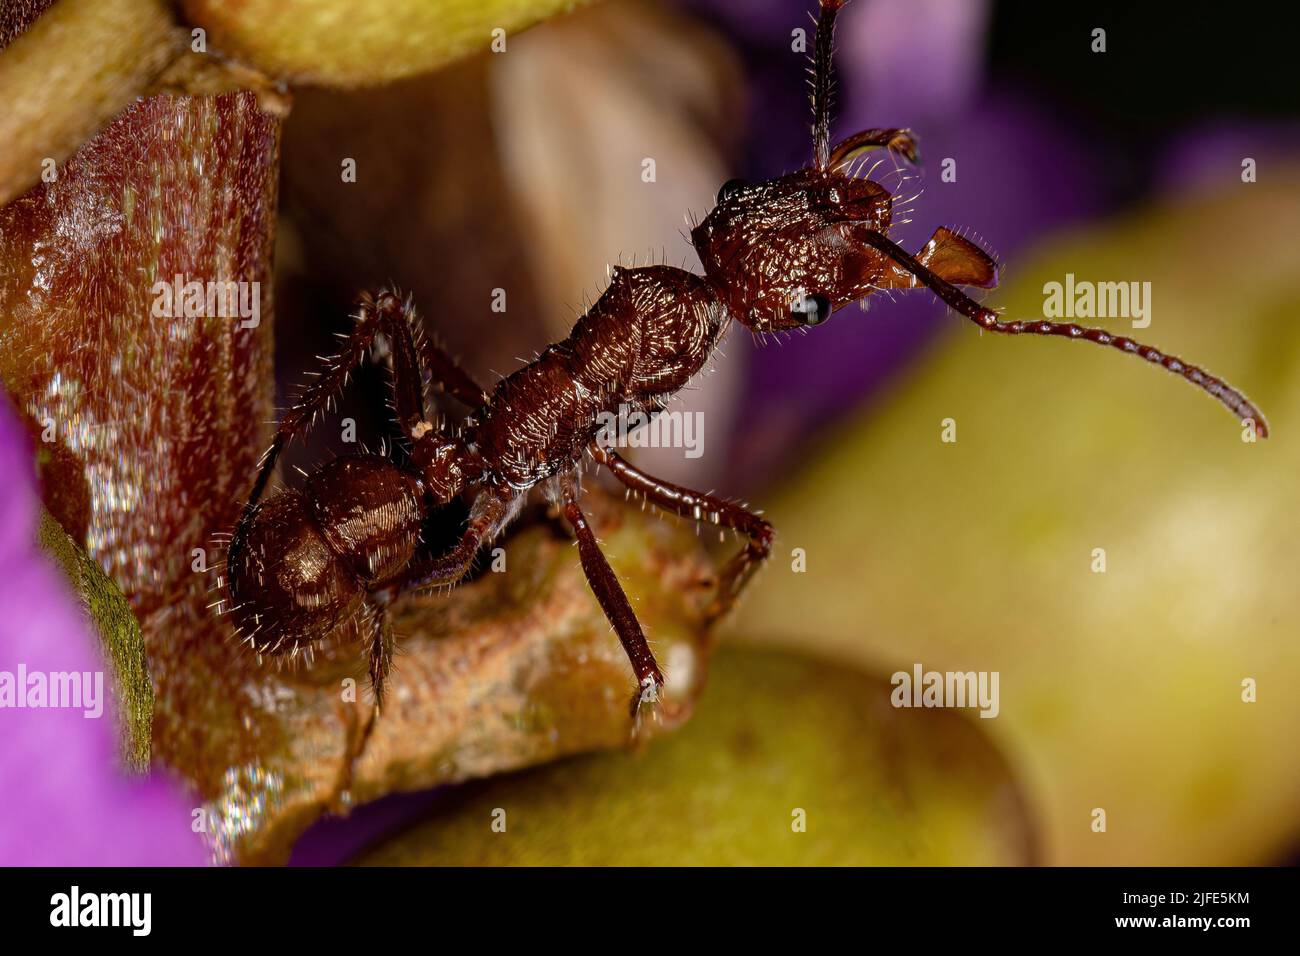 Adult Female Ectatommine Ant of the Genus Ectatomma Stock Photo